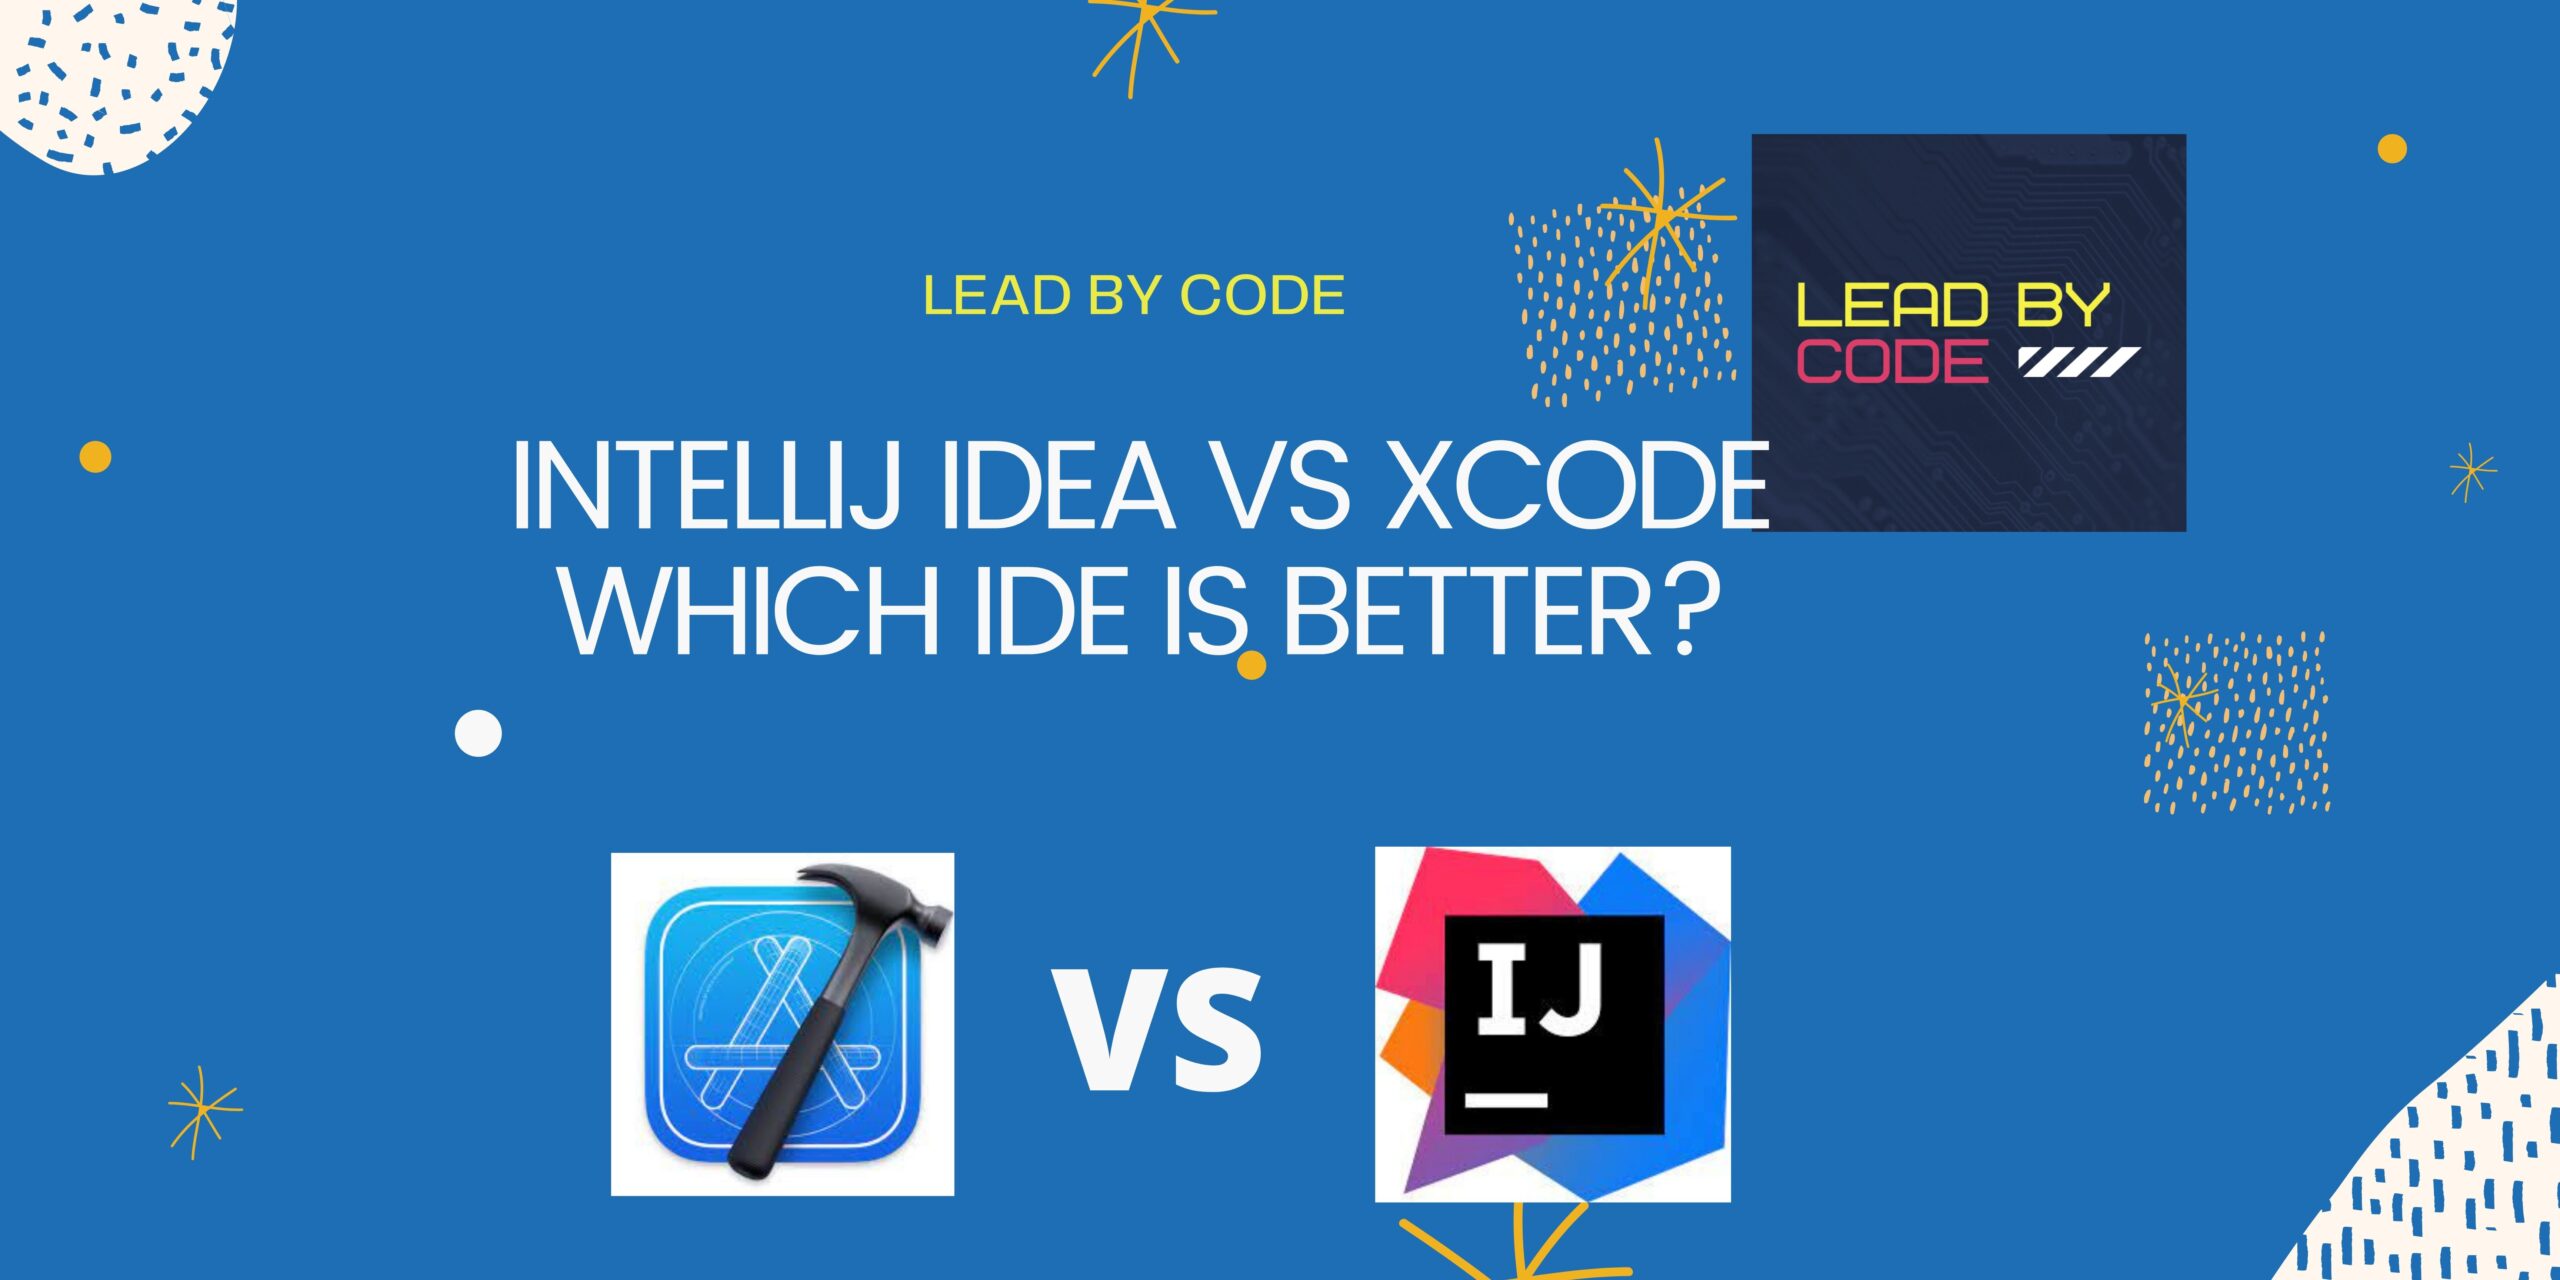 Intellij IDEA vs Xcode